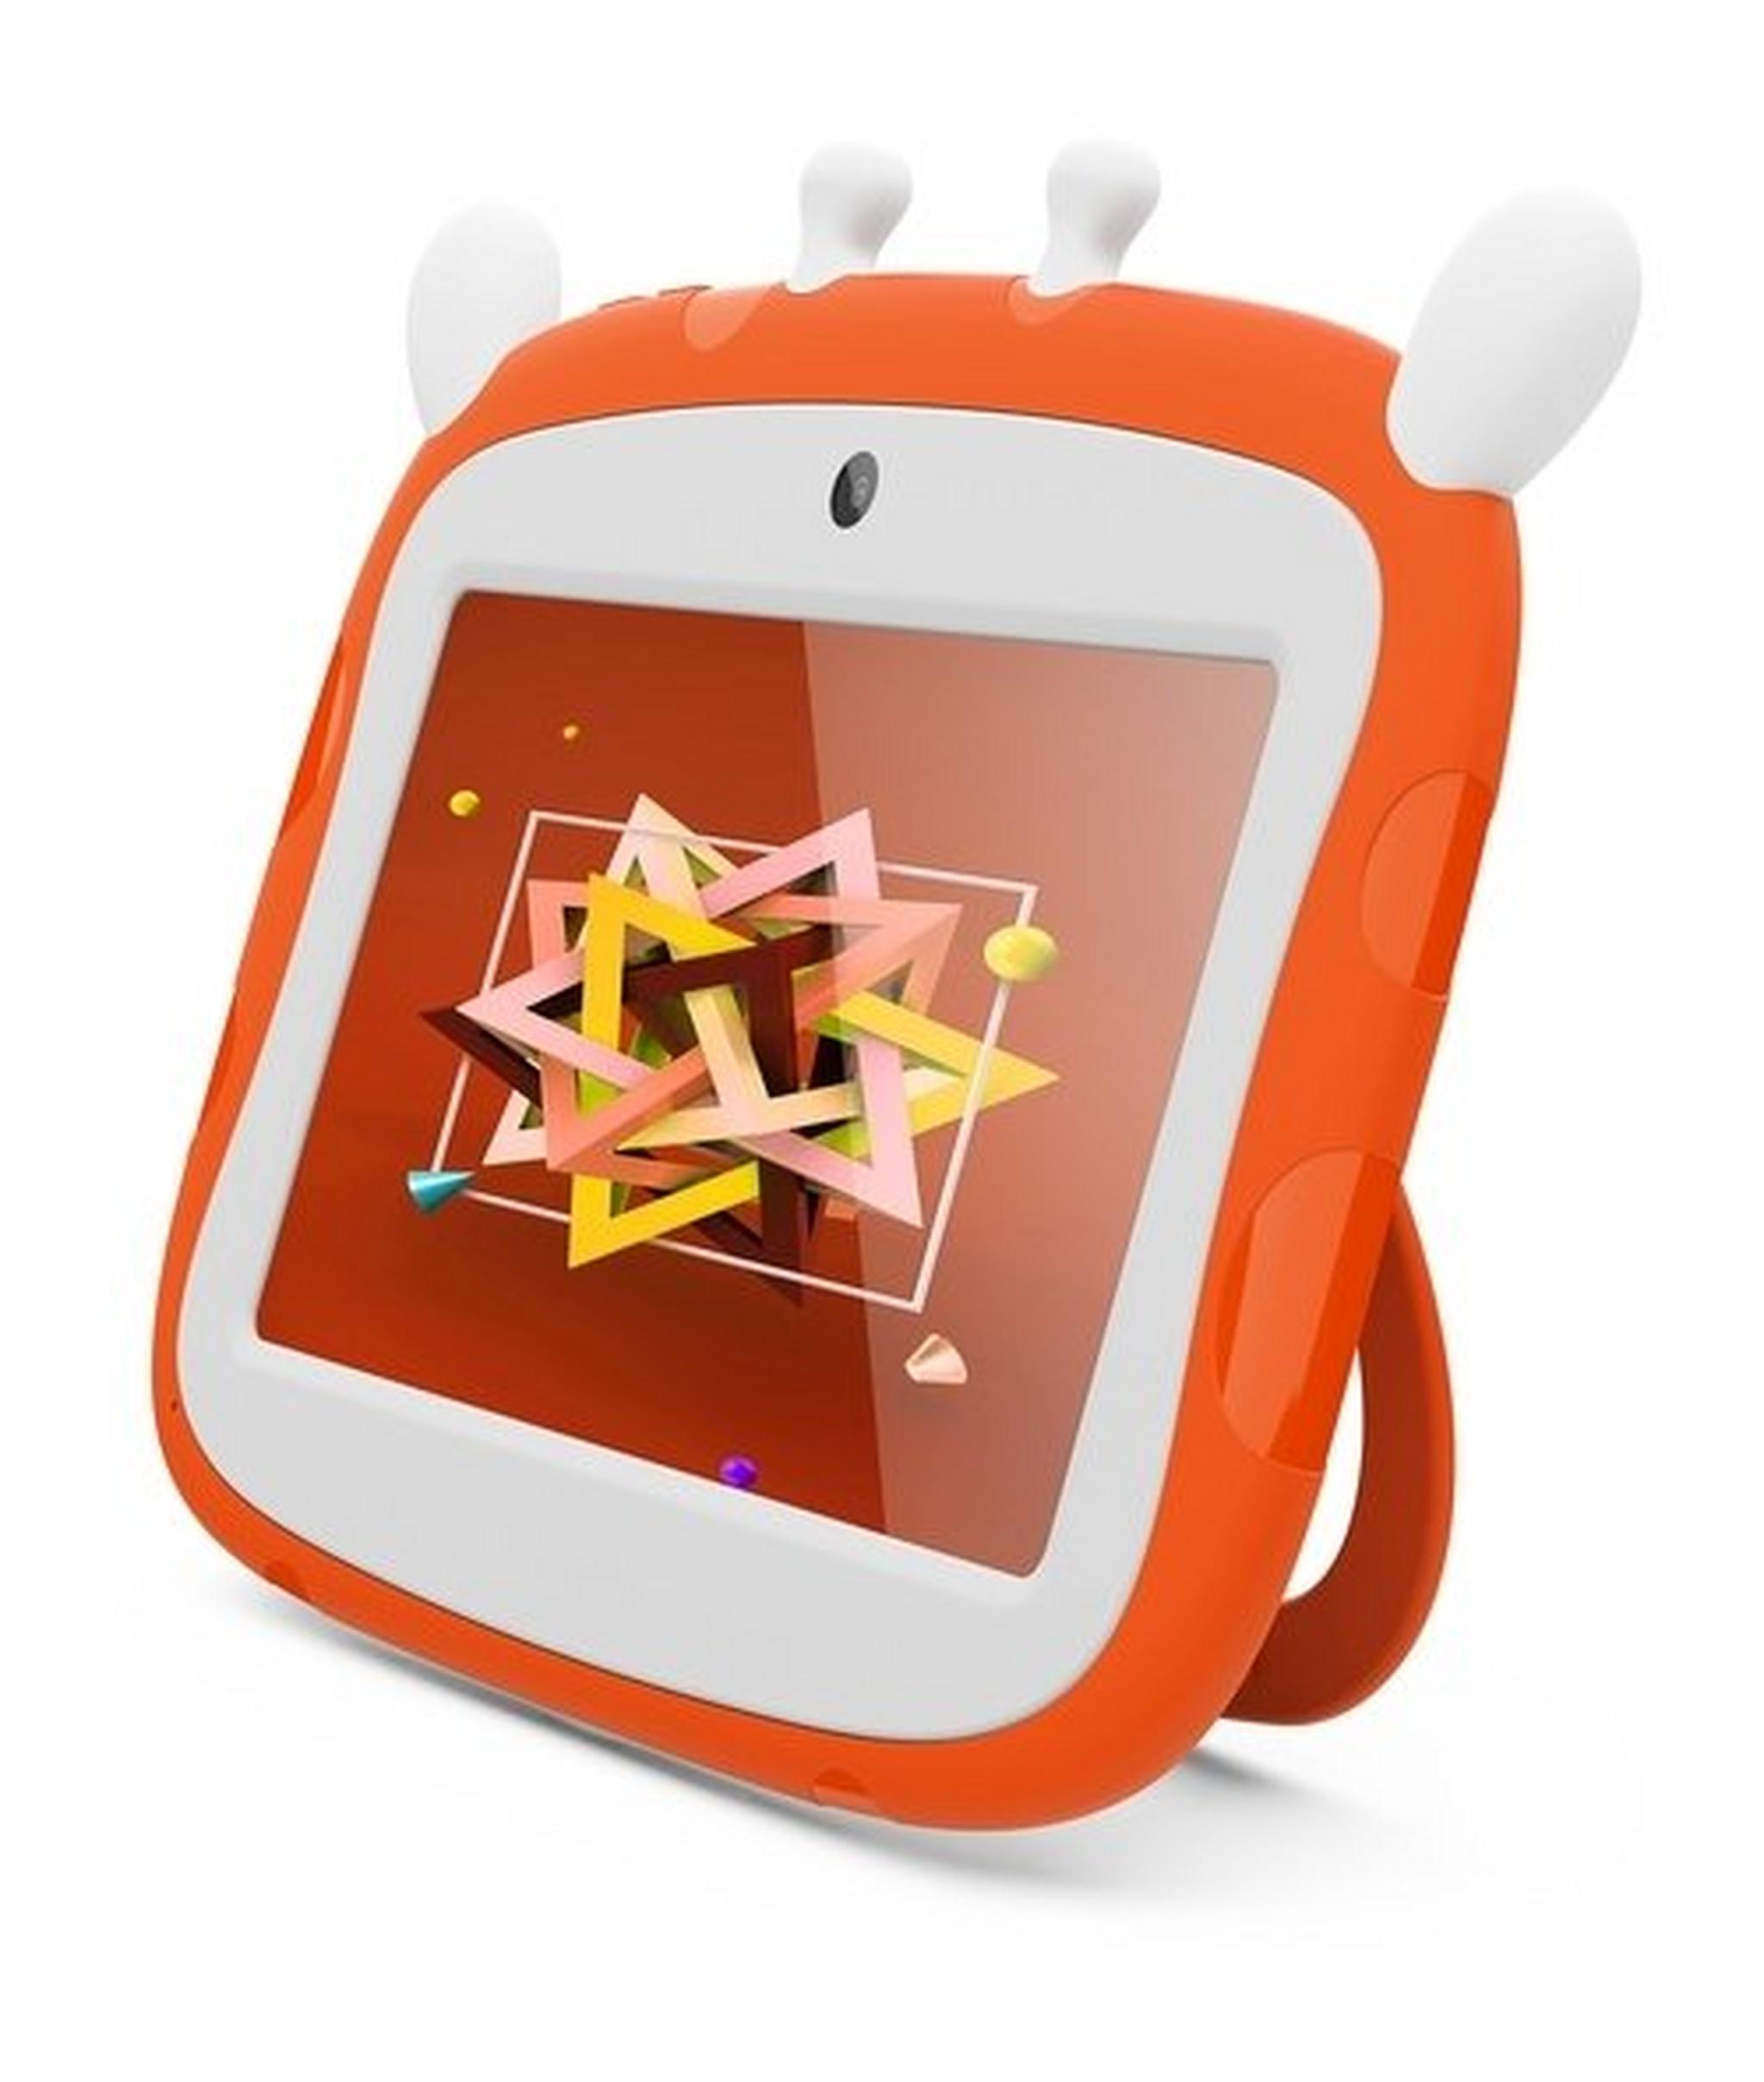 G-Tab Q2S 16GB 7-inch Kids Wifi Tablet - Orange